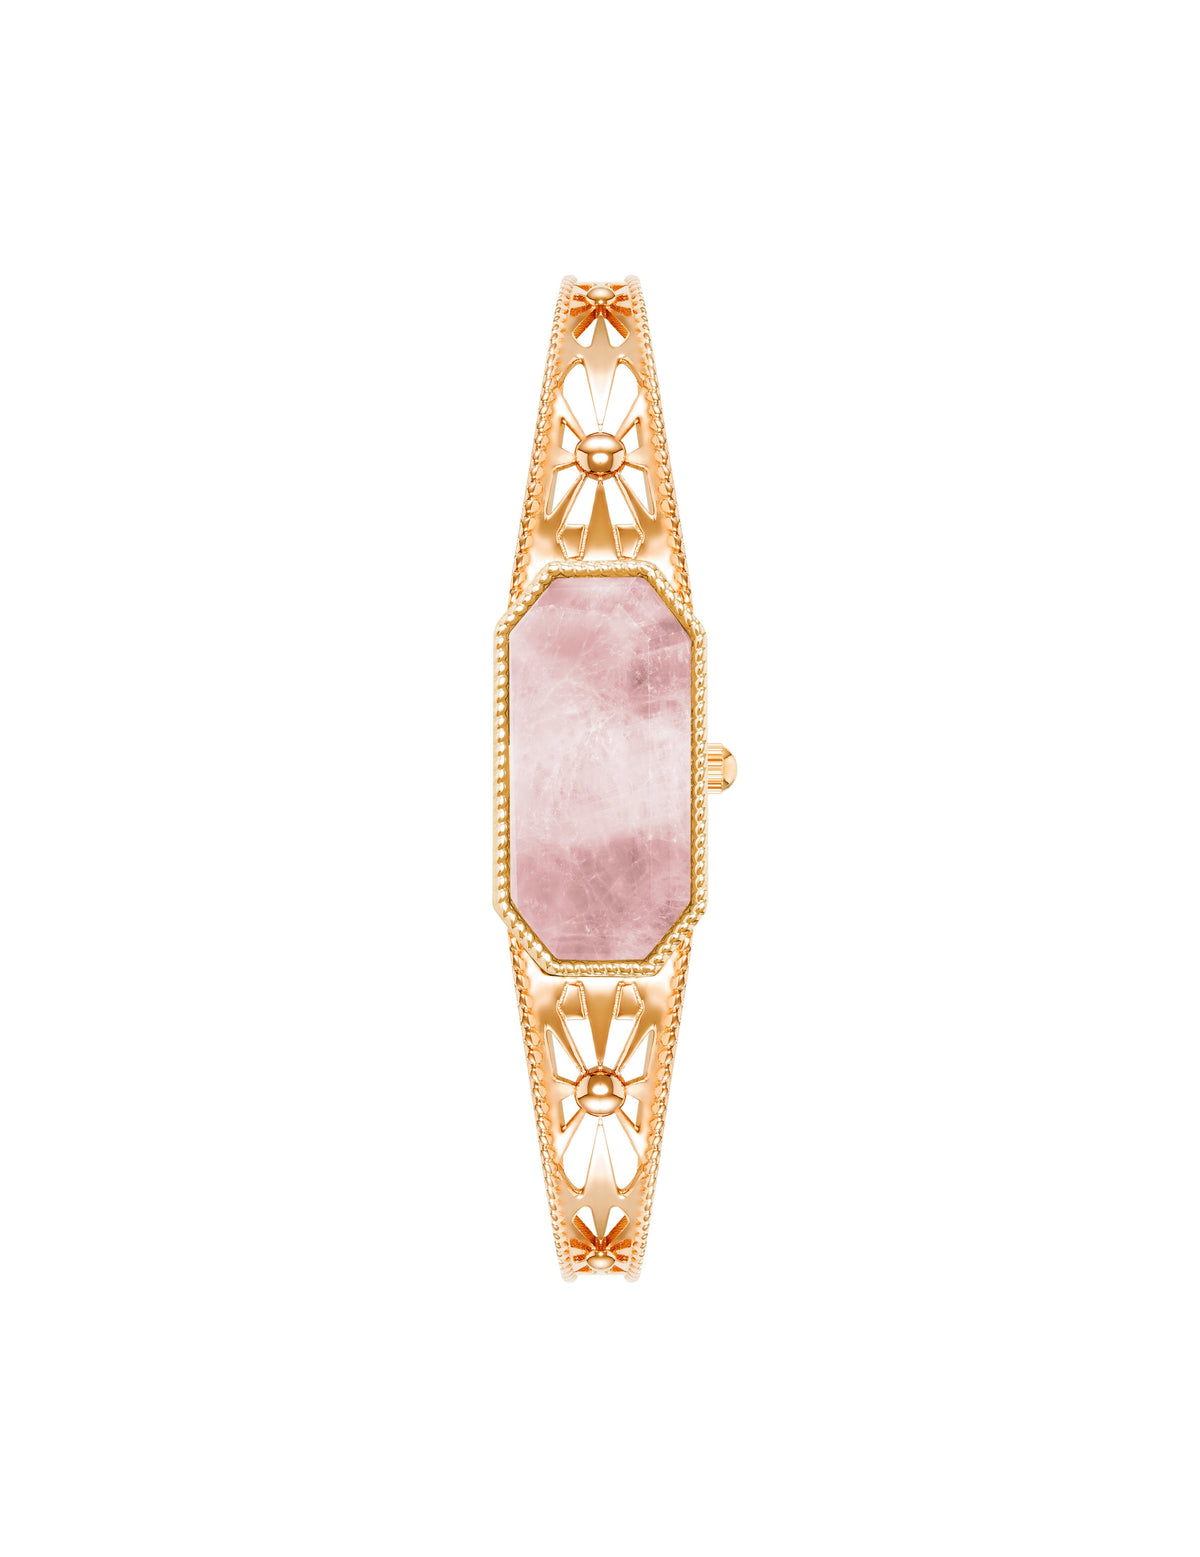 Anne Klein Rose quartz/Rose gold Gemstone Covered Dial Watch